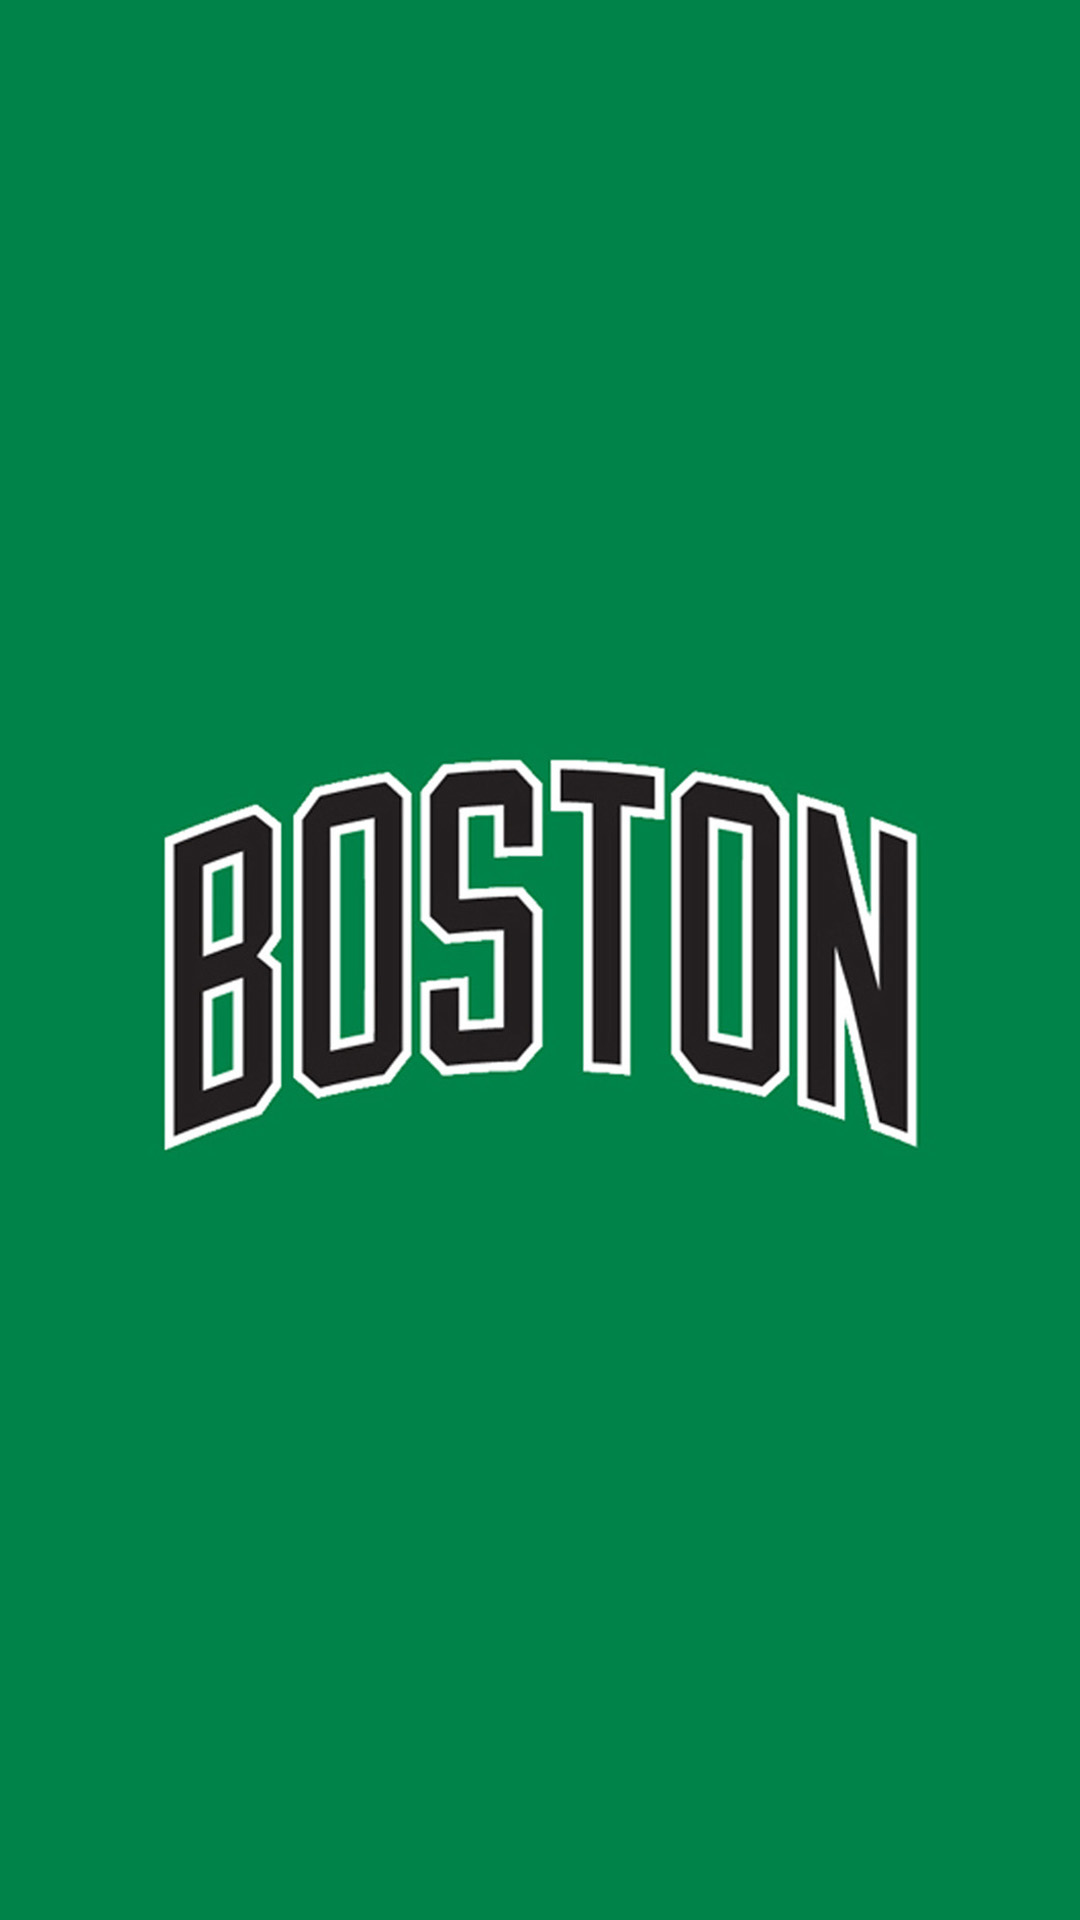 Boston Celtics Samsung Wallpapers, Samsung Galaxy S5, Galaxy S4 ...